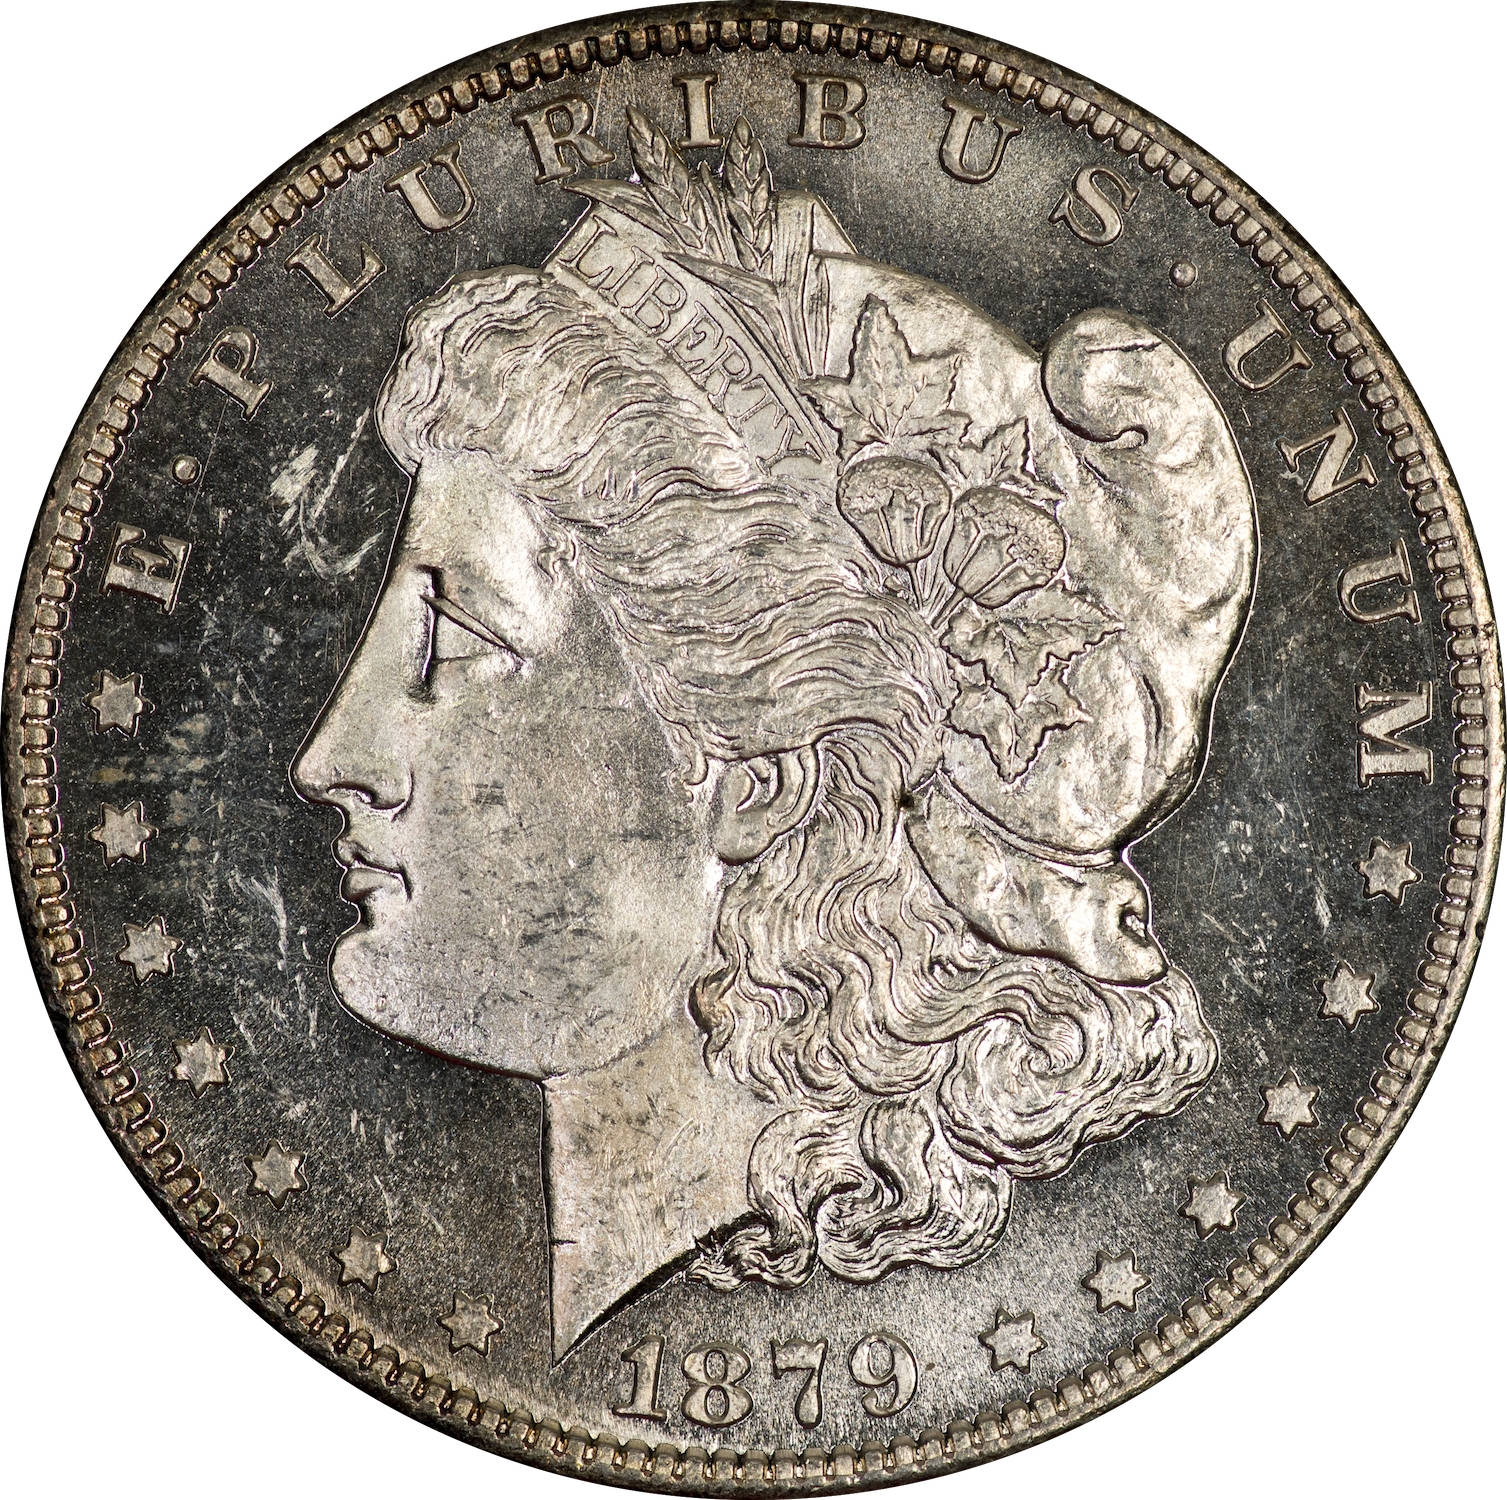 1879 S Rev 79 Morgan Dollar - Obverse copy.png